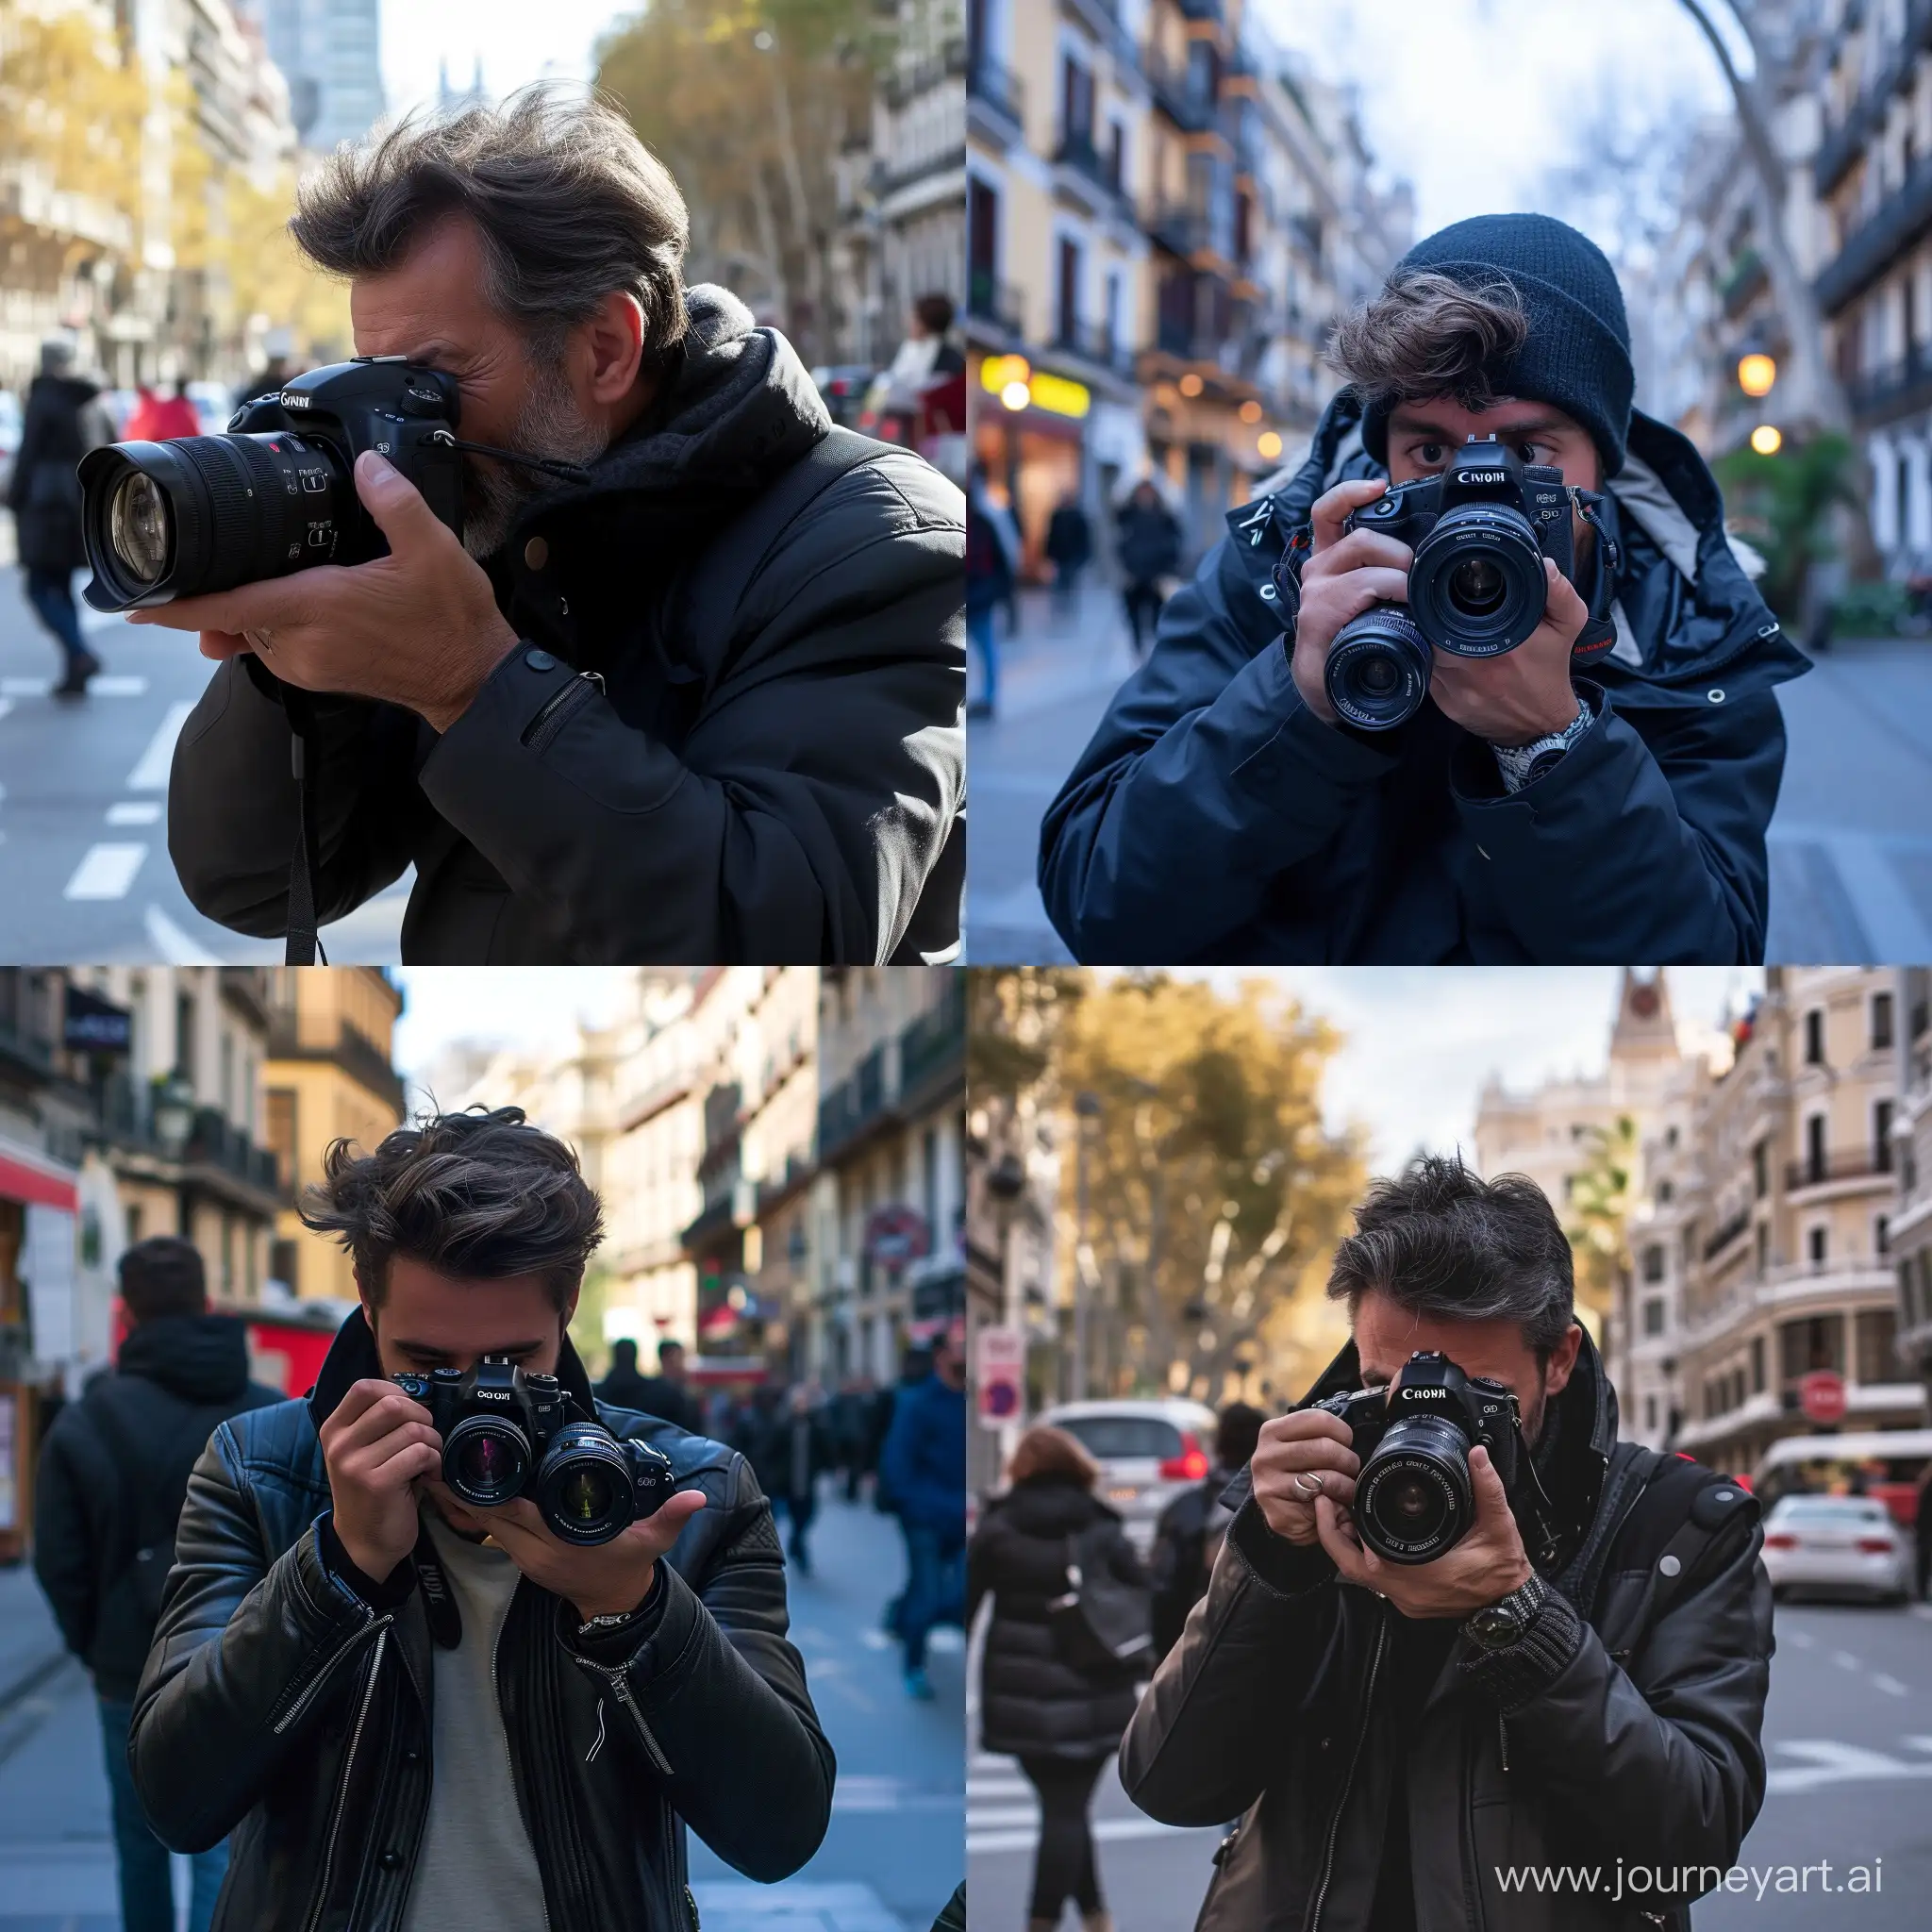 Professional-Photographer-Capturing-Vibrant-Street-Scenes-in-Madrid